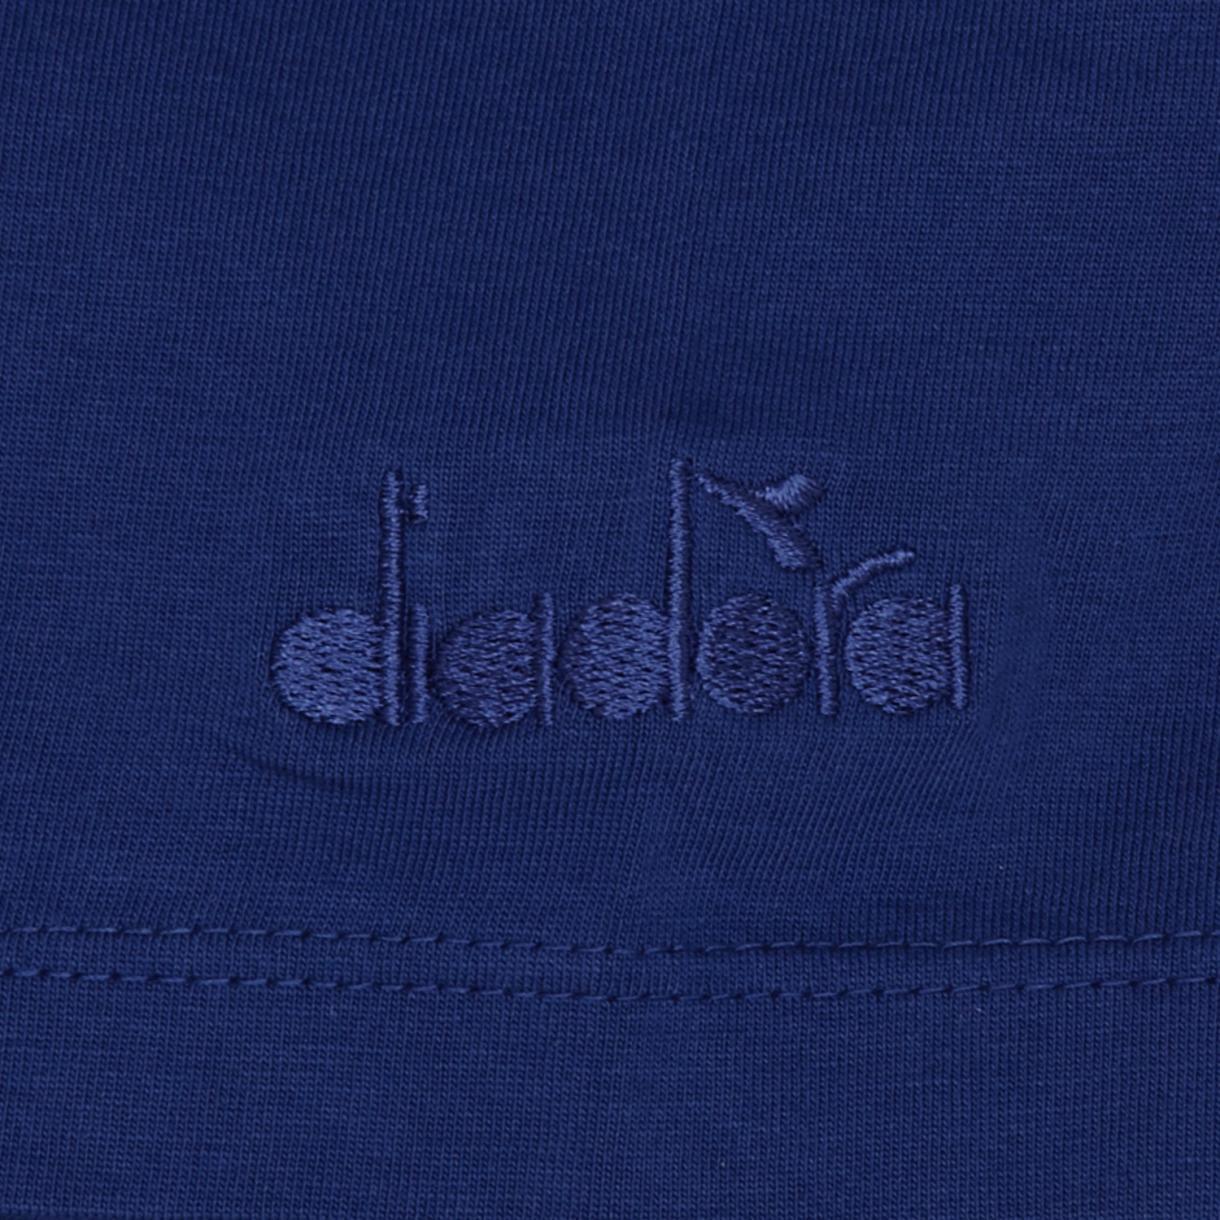 Five Ball Diadora Logo - Diadora Mens T SHIRT SS BL Navy, Blue T Shirts And Tank Tops